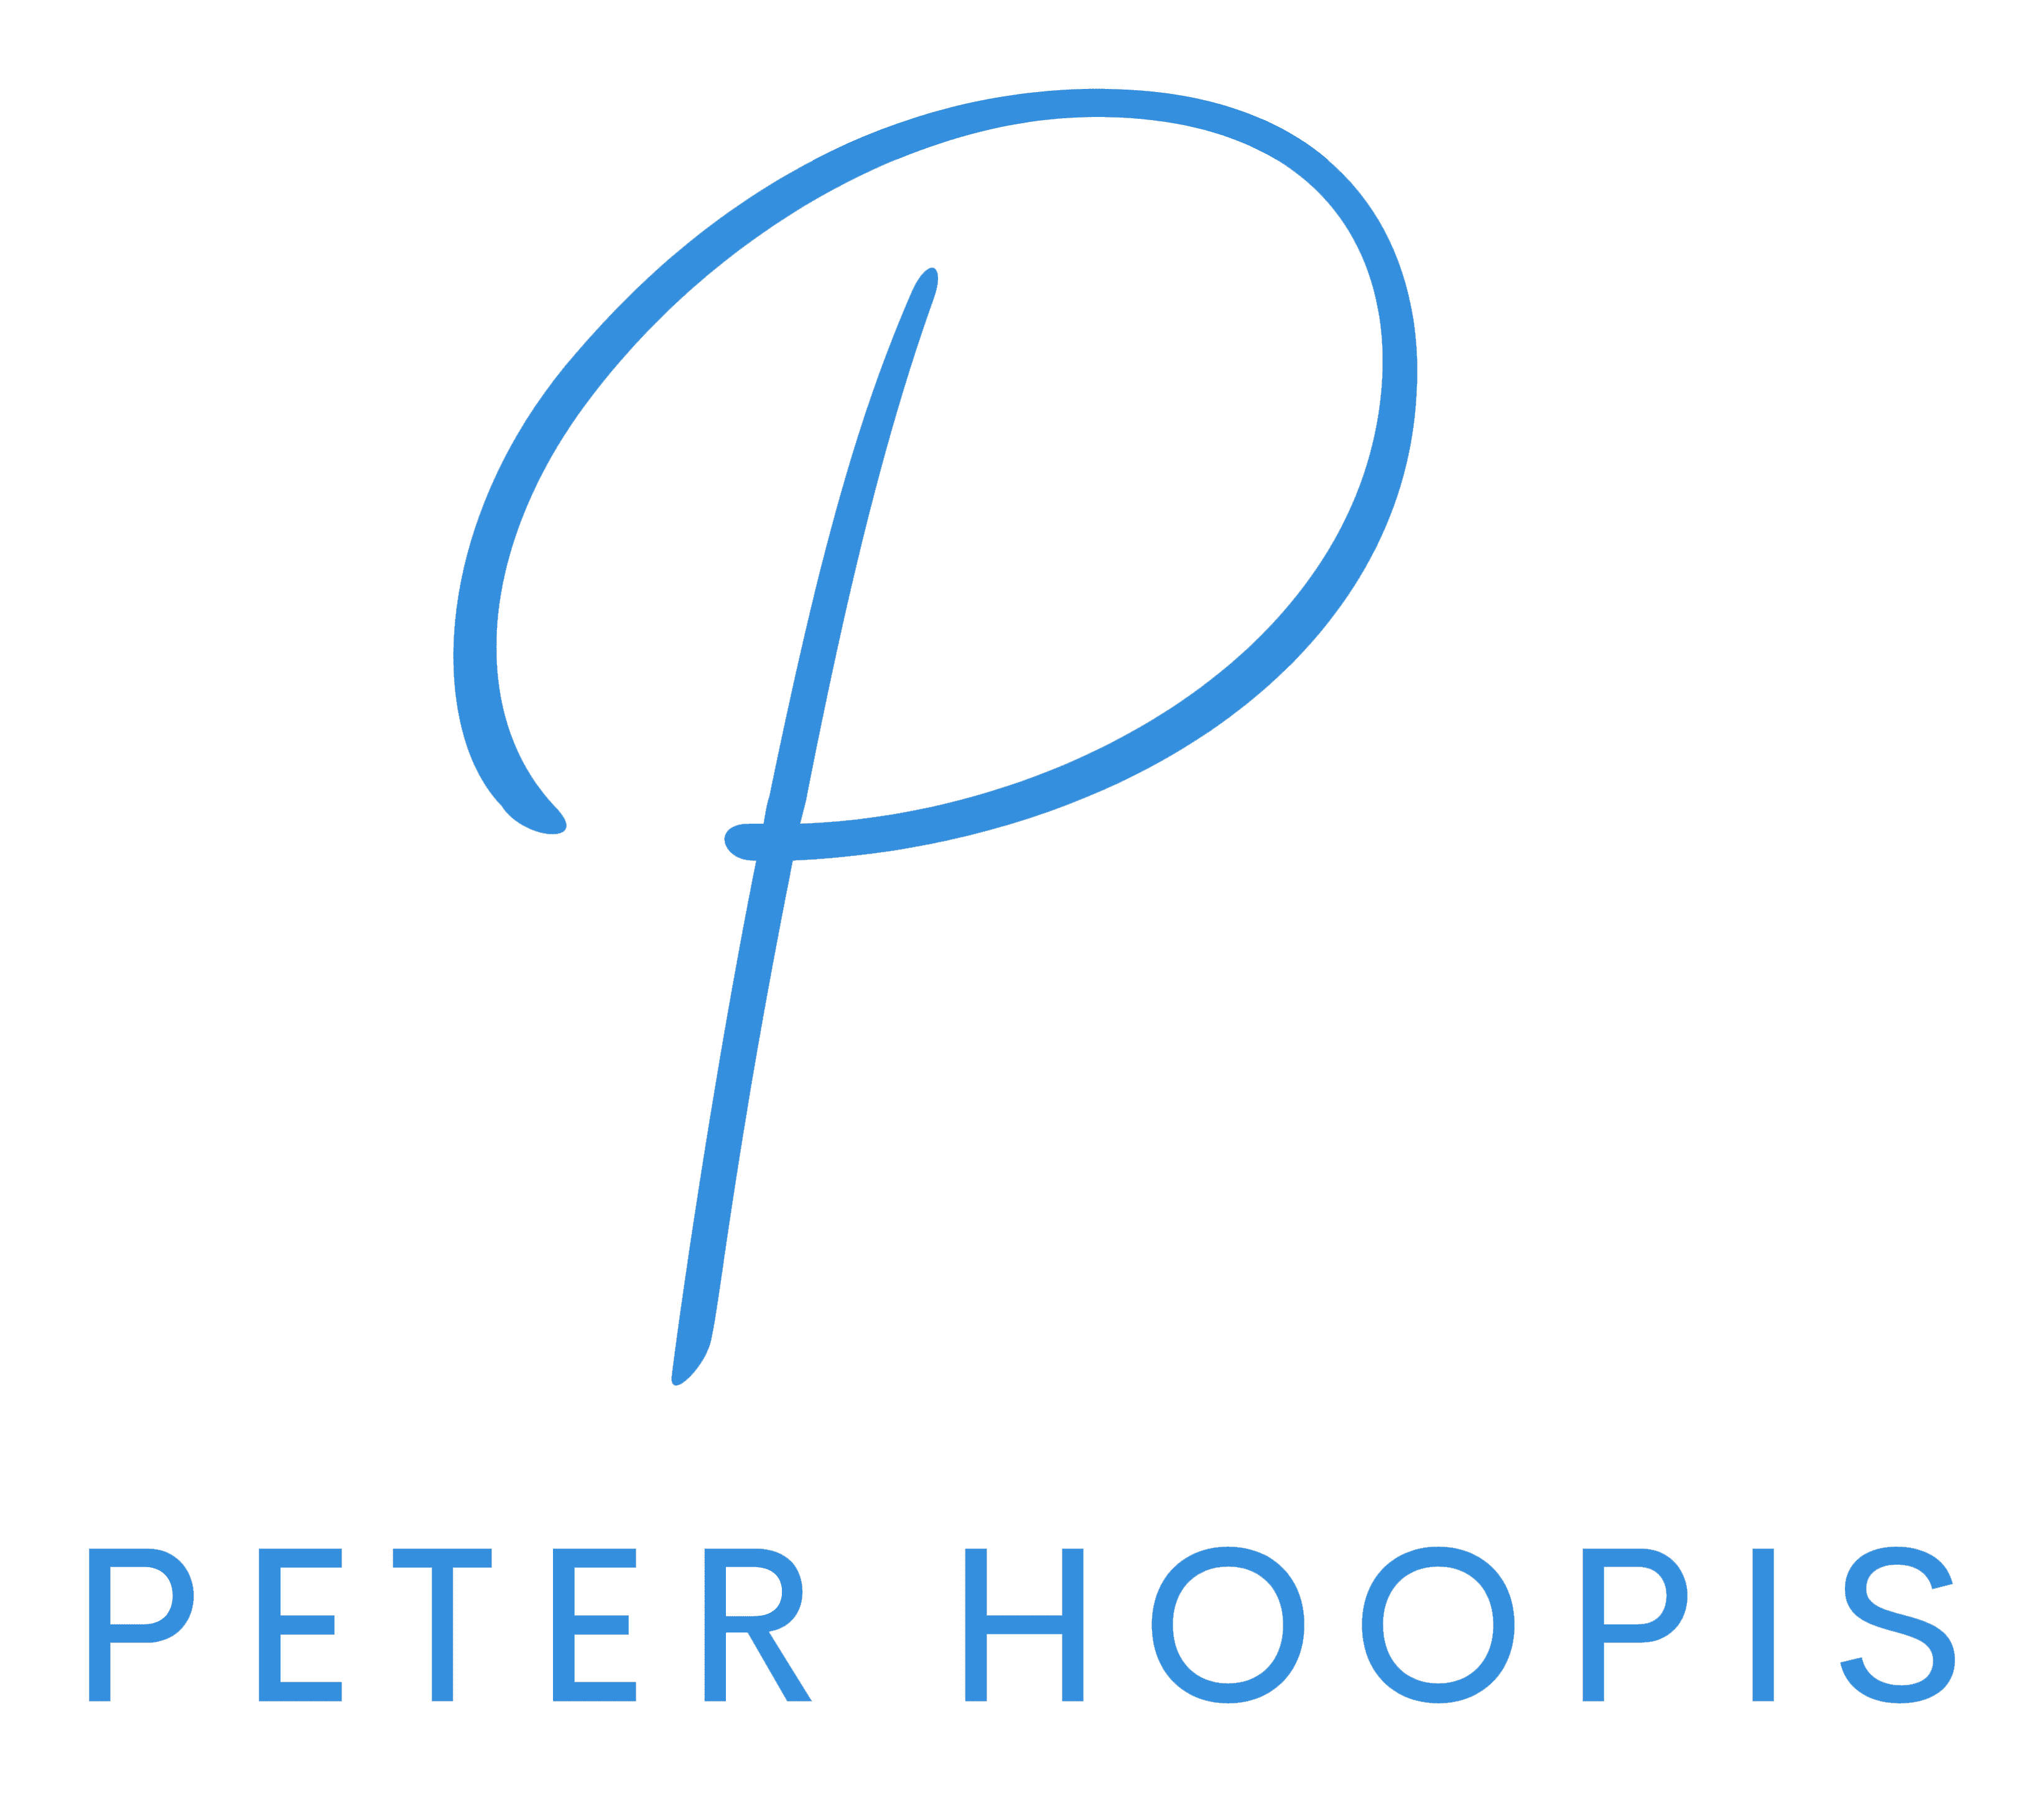 Peter Hoopis